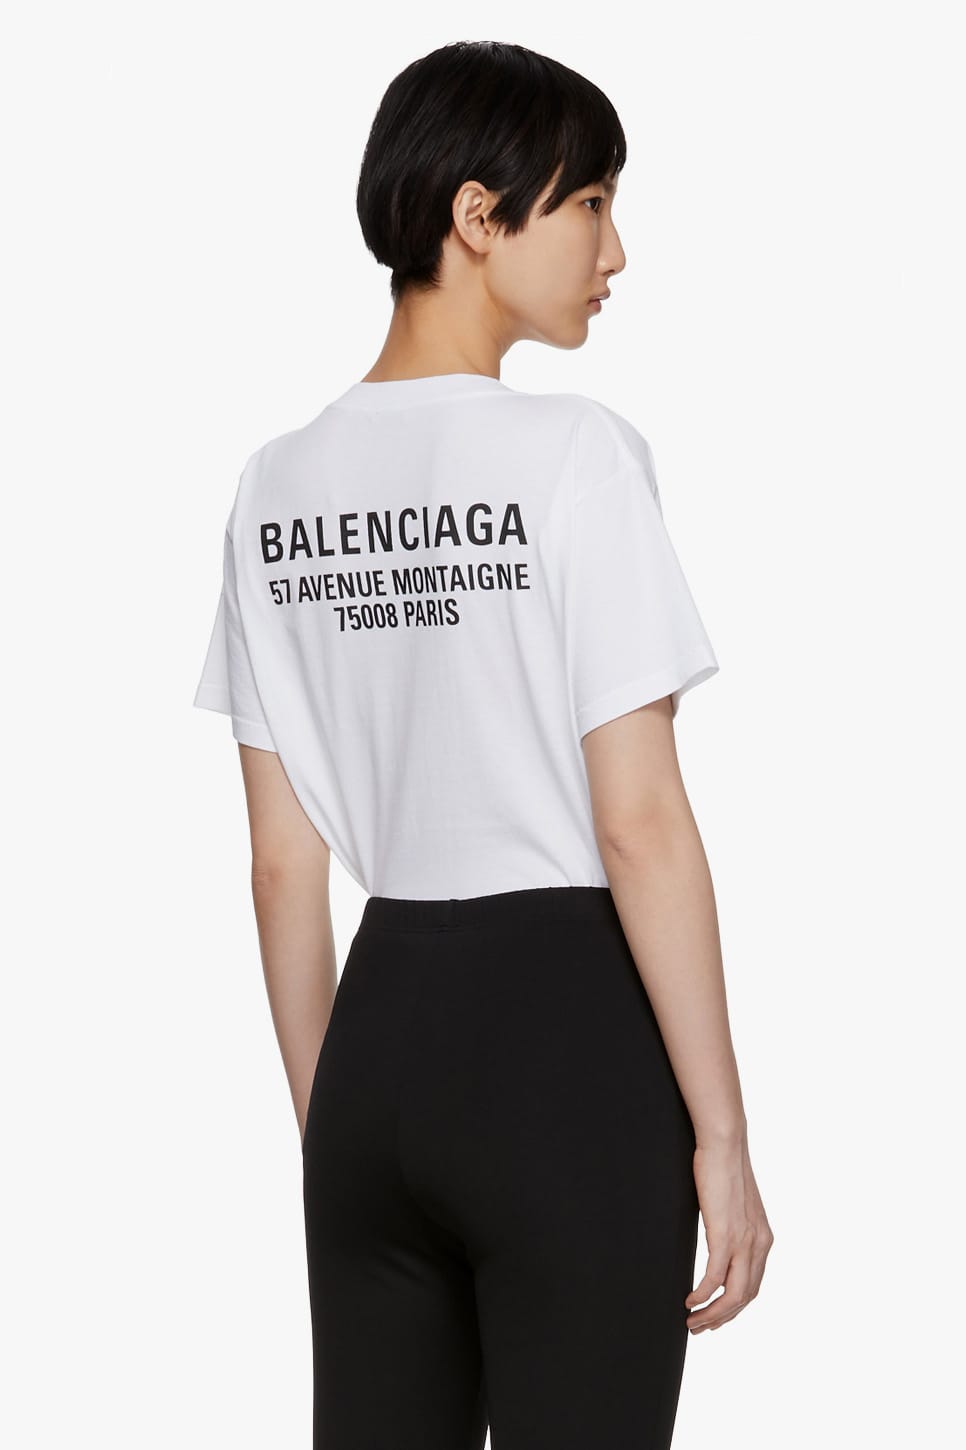 new balenciaga logo out t shirt